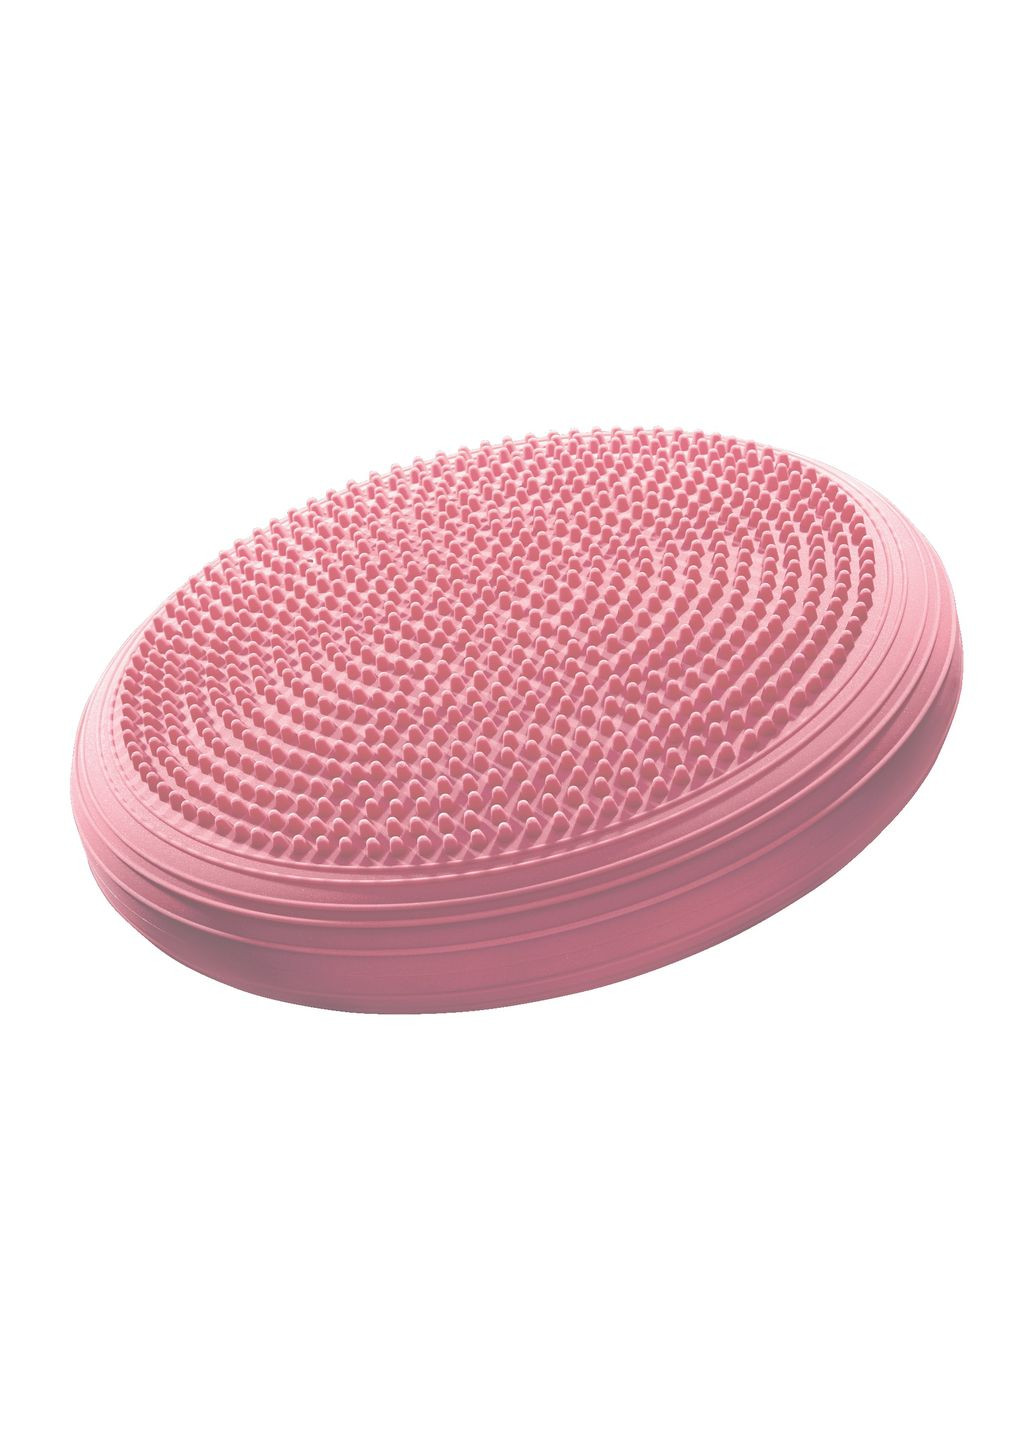 Балансувальна подушкадиск MED+ 33 см (сенсомоторна) масажна Pink 4FIZJO 4fj0316 (275095828)